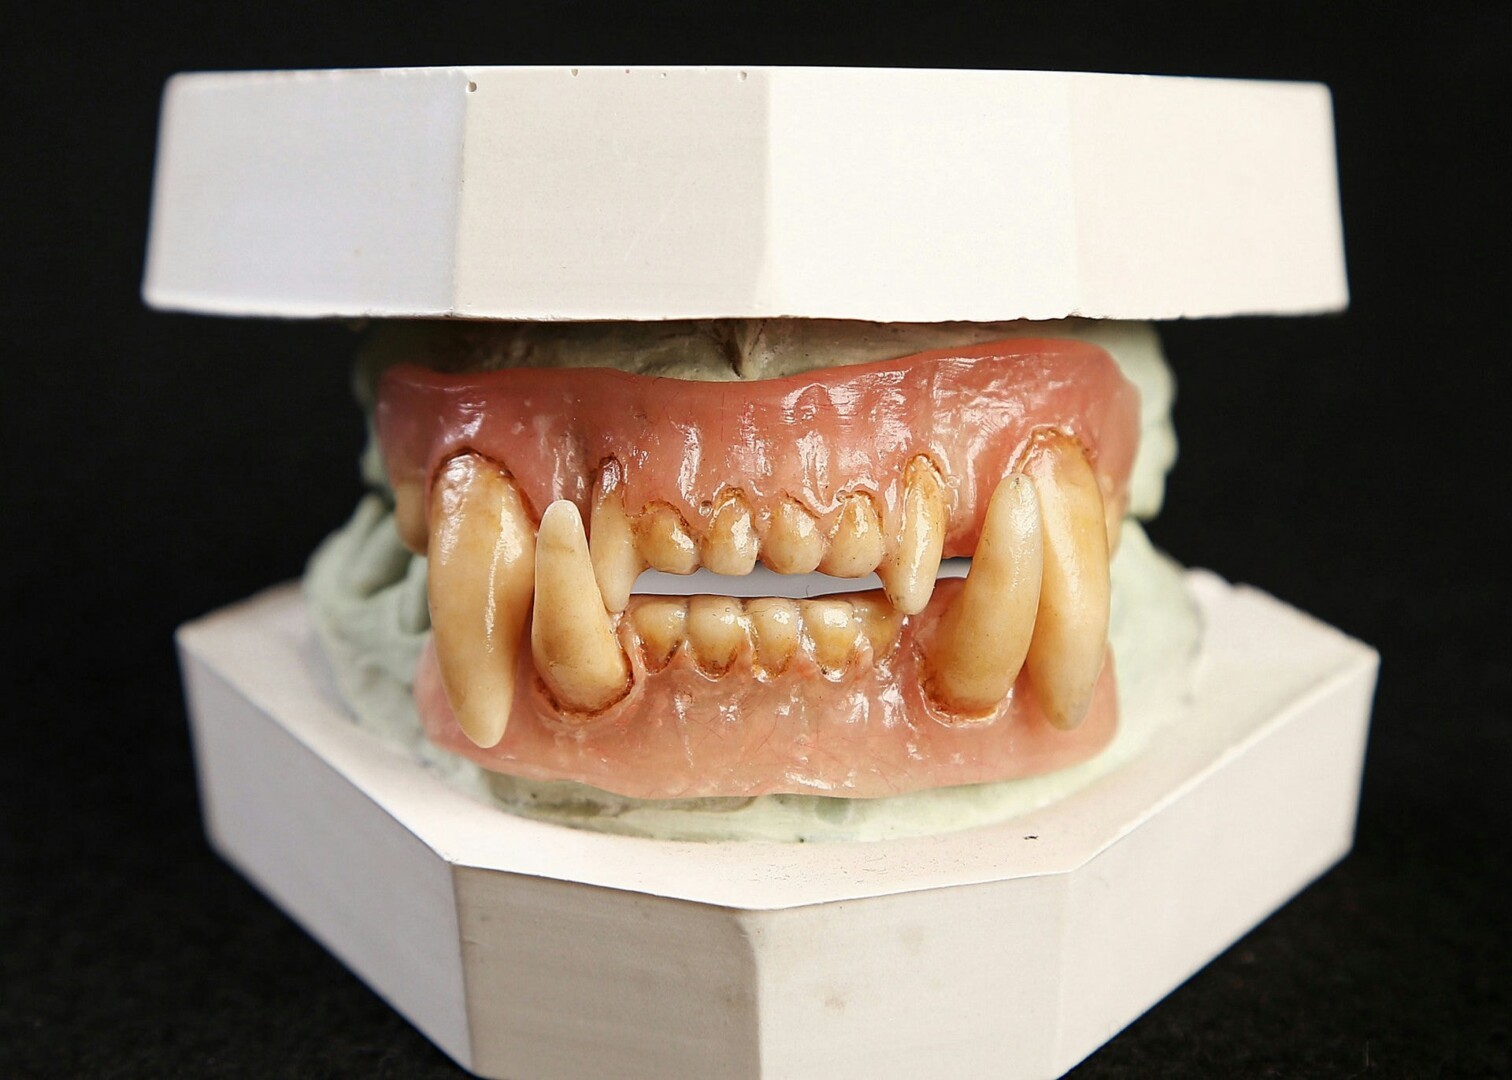 A sixth model of sharp, inhuman 3D printed teeth.